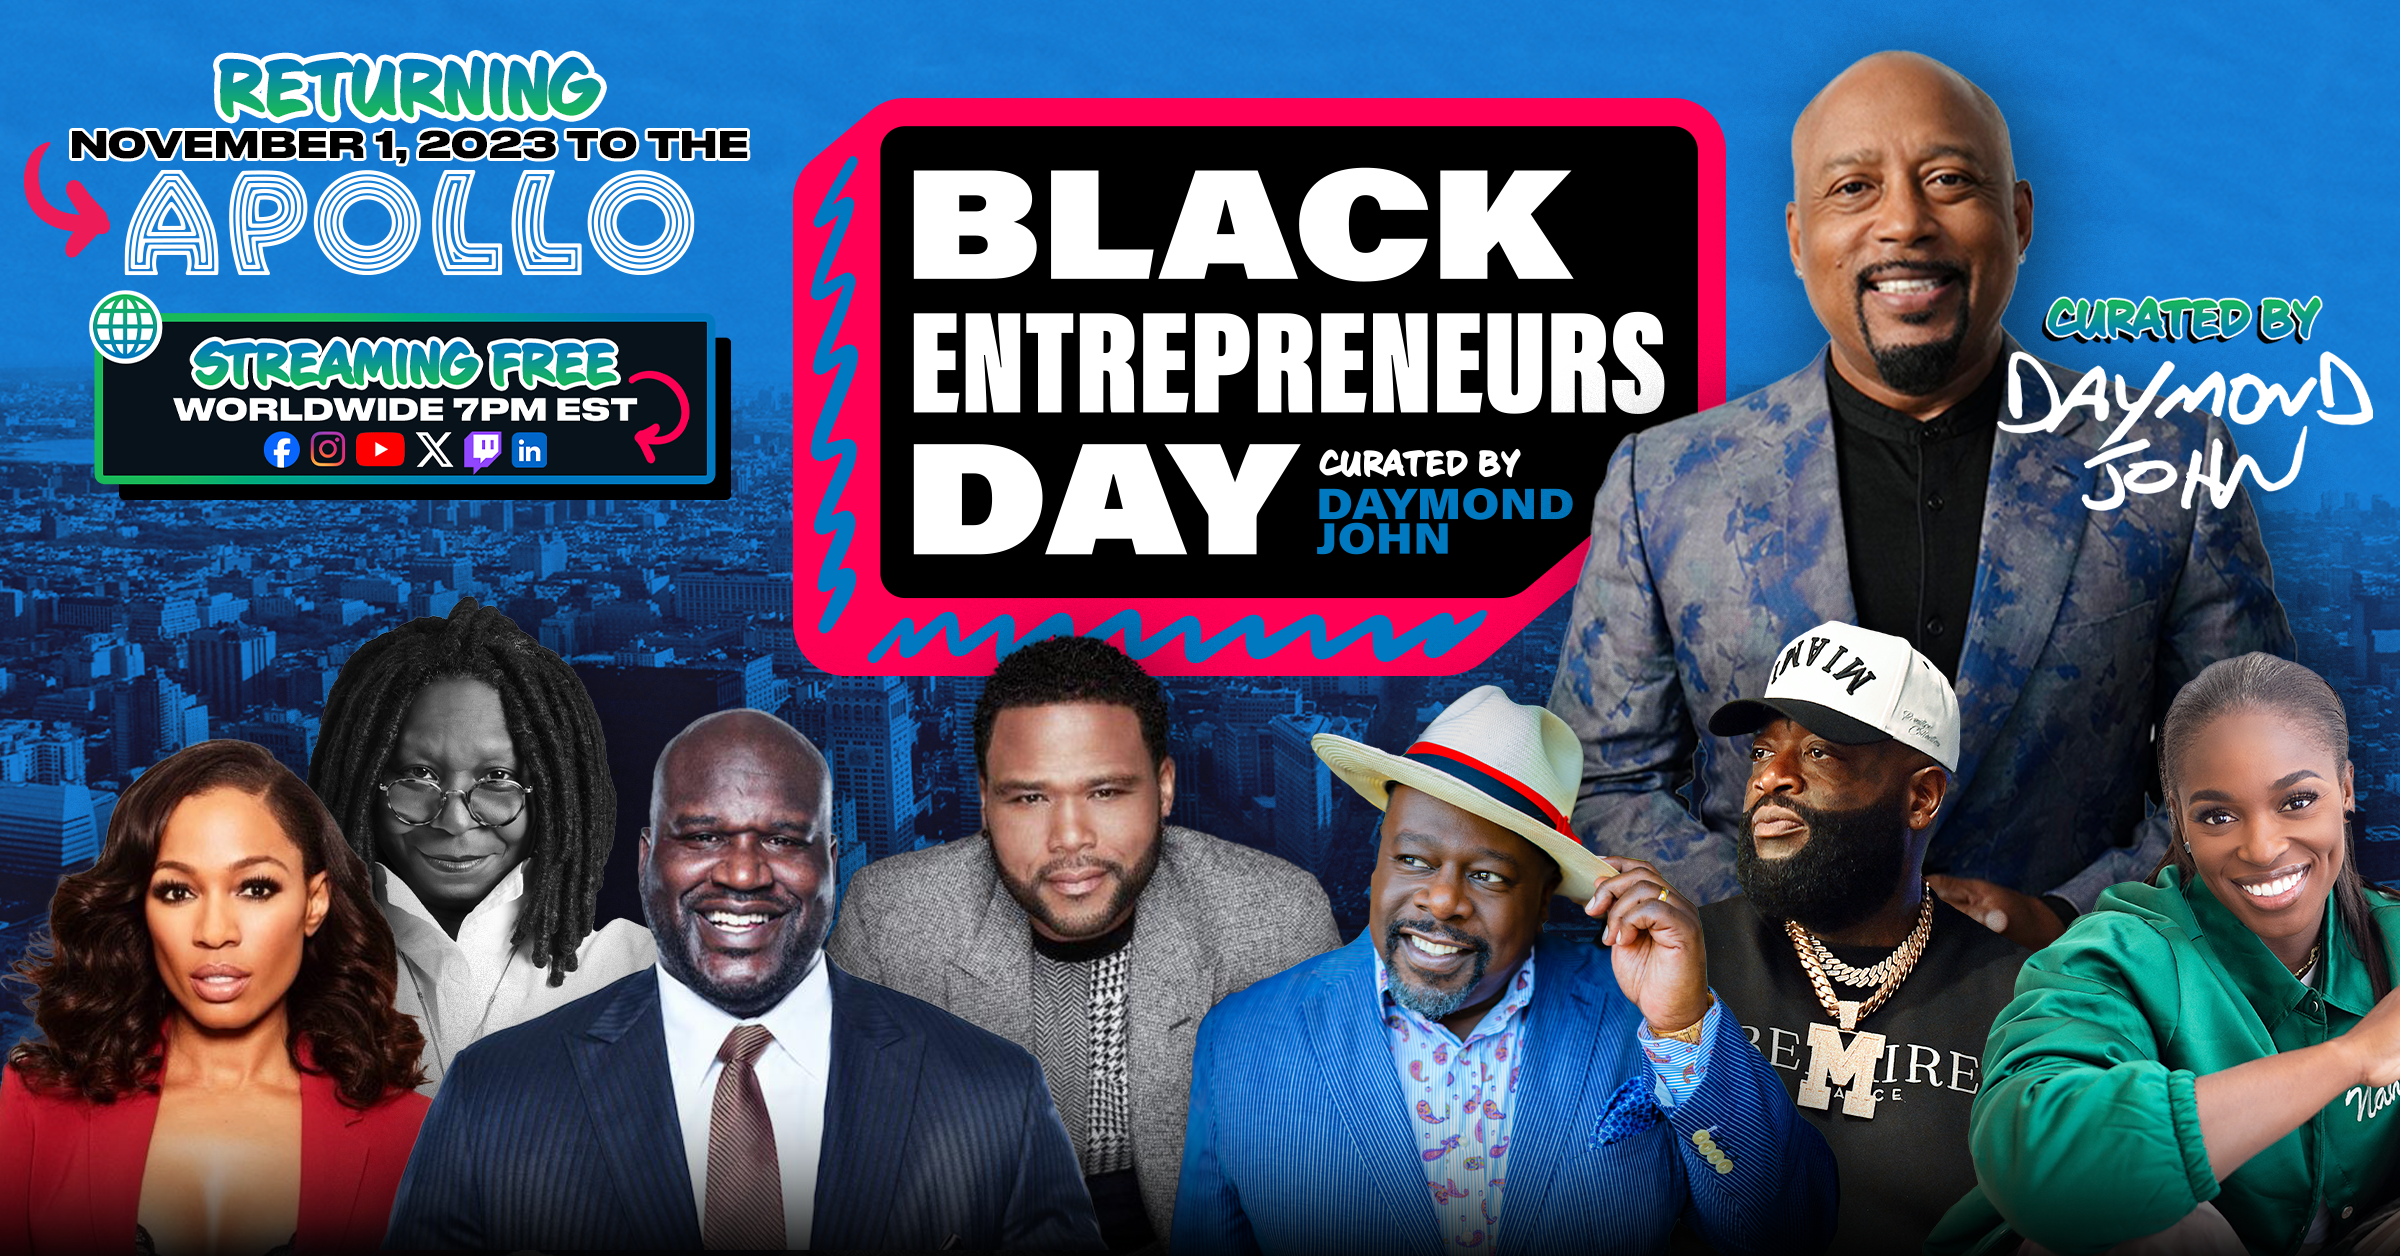 The Show - Black Entrepreneurs Day